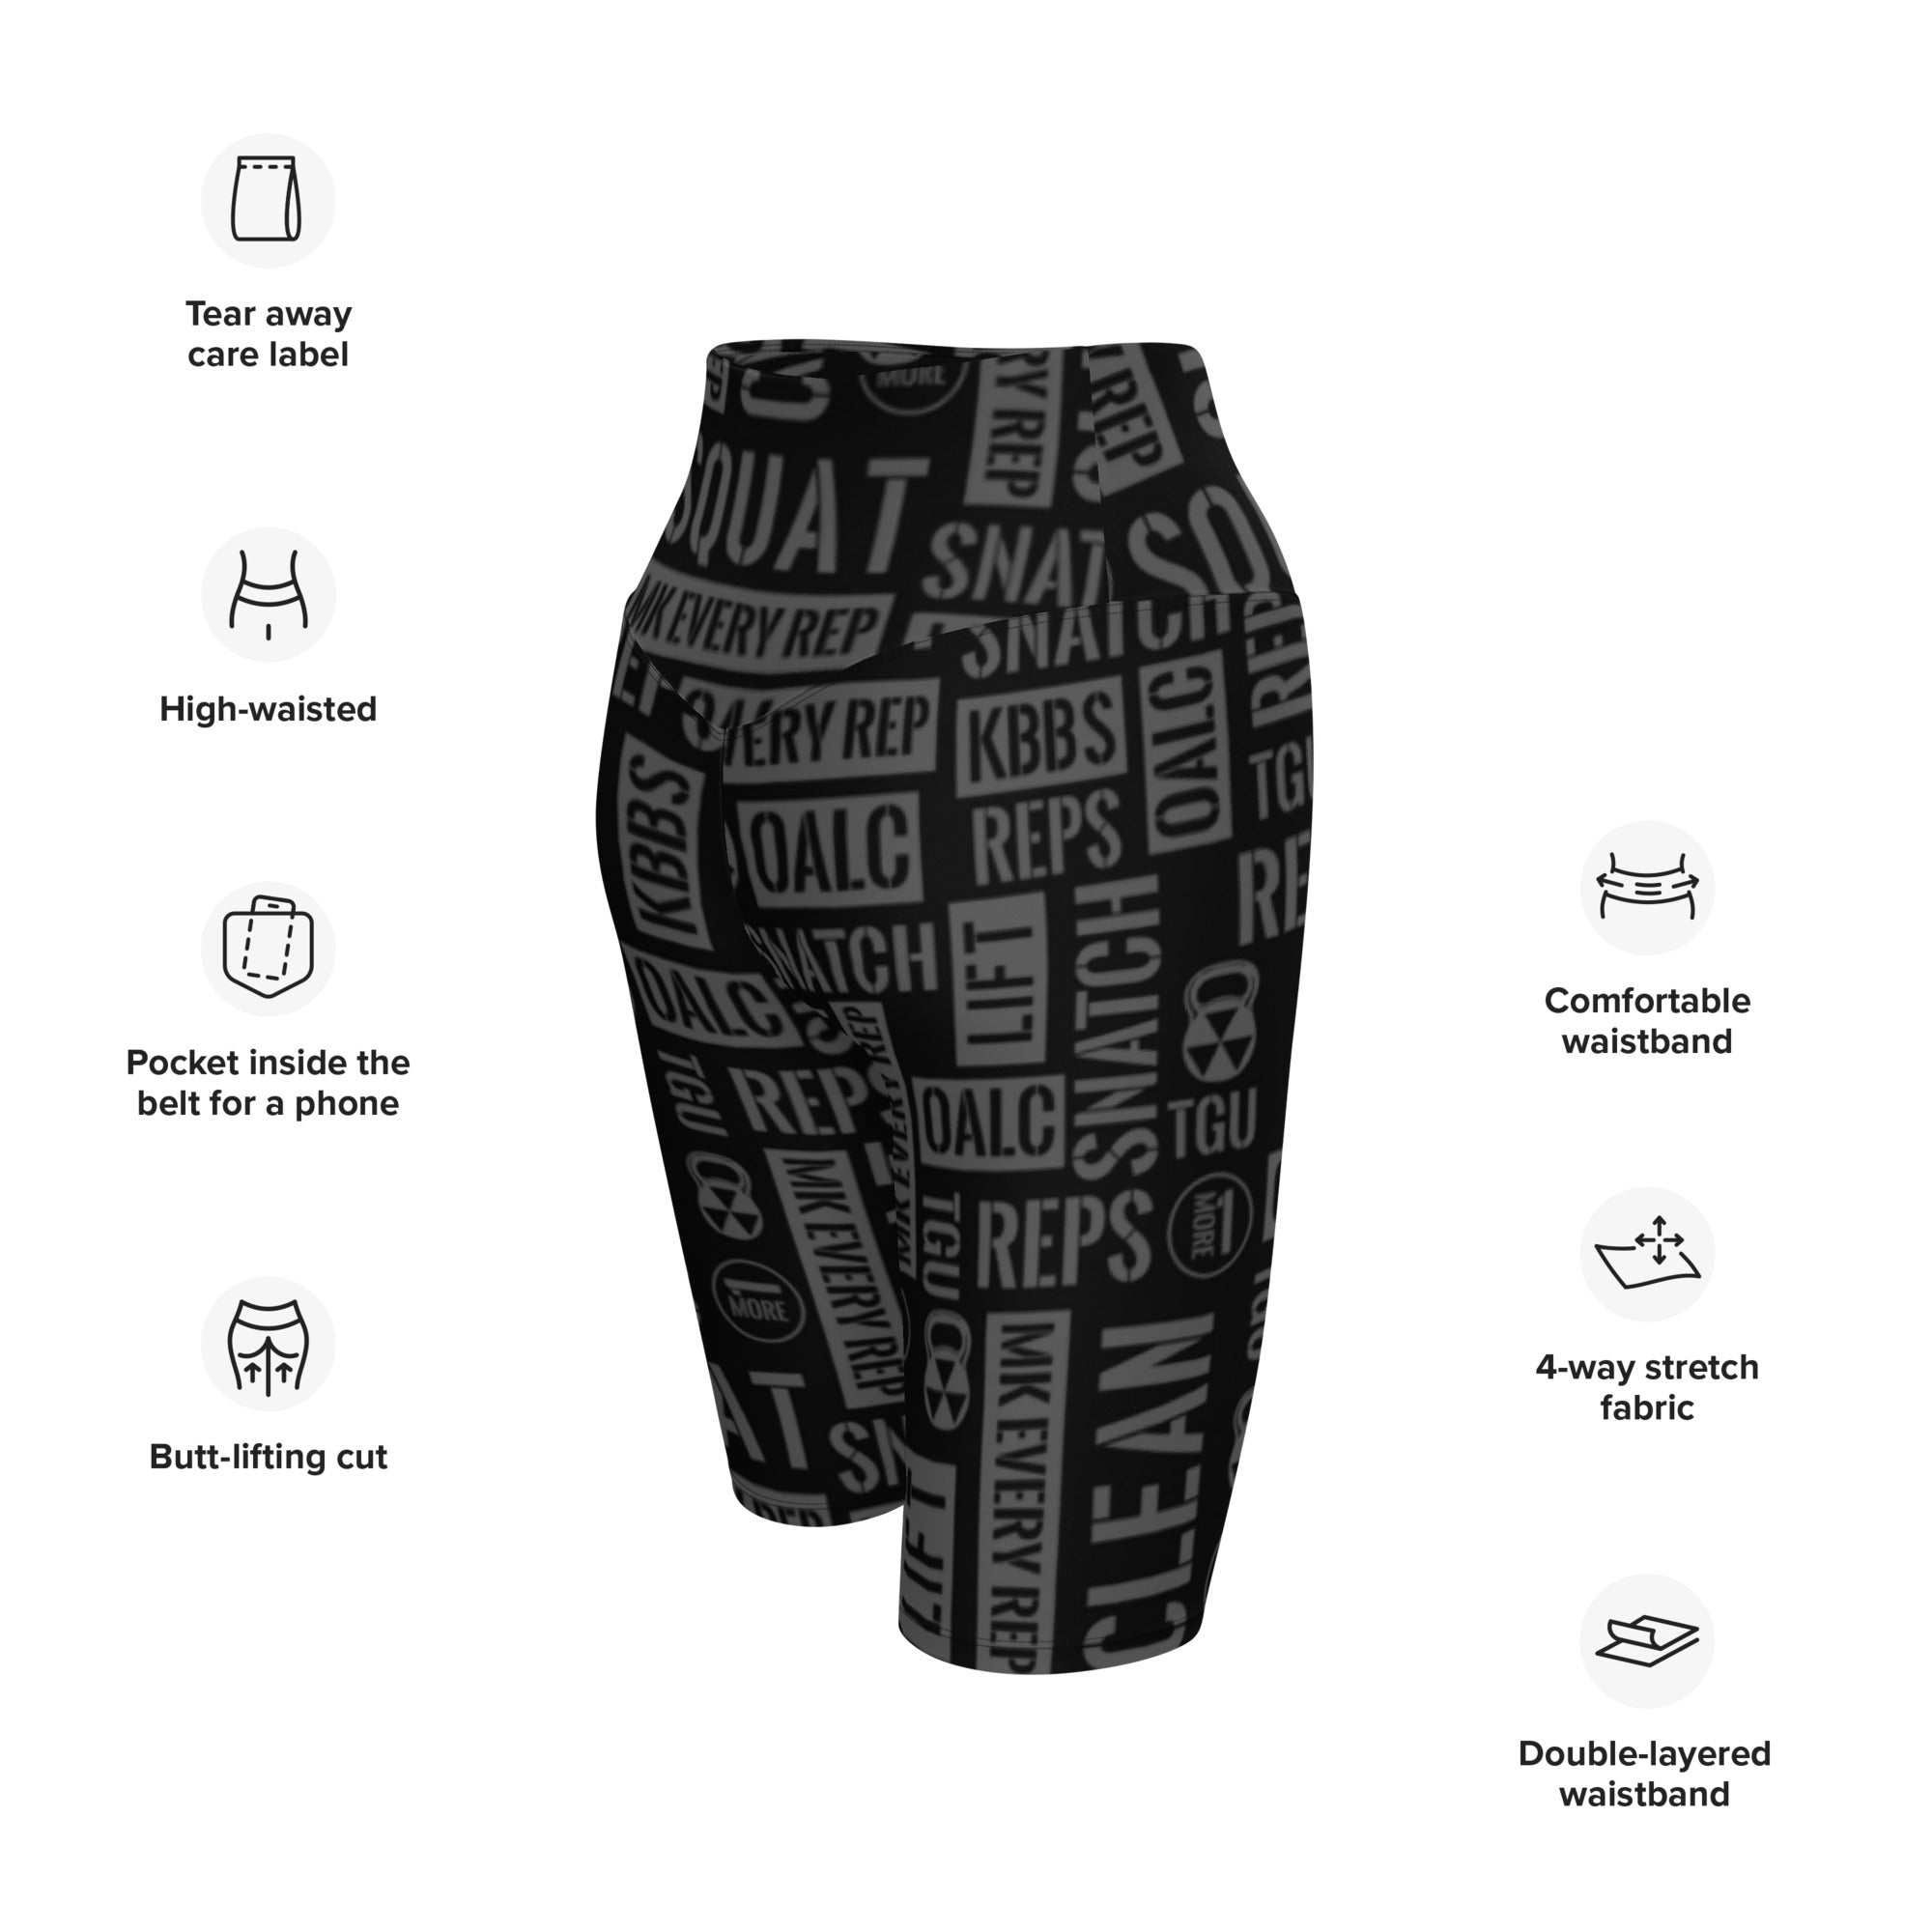 Black/Gray Acronyms Biker Shorts